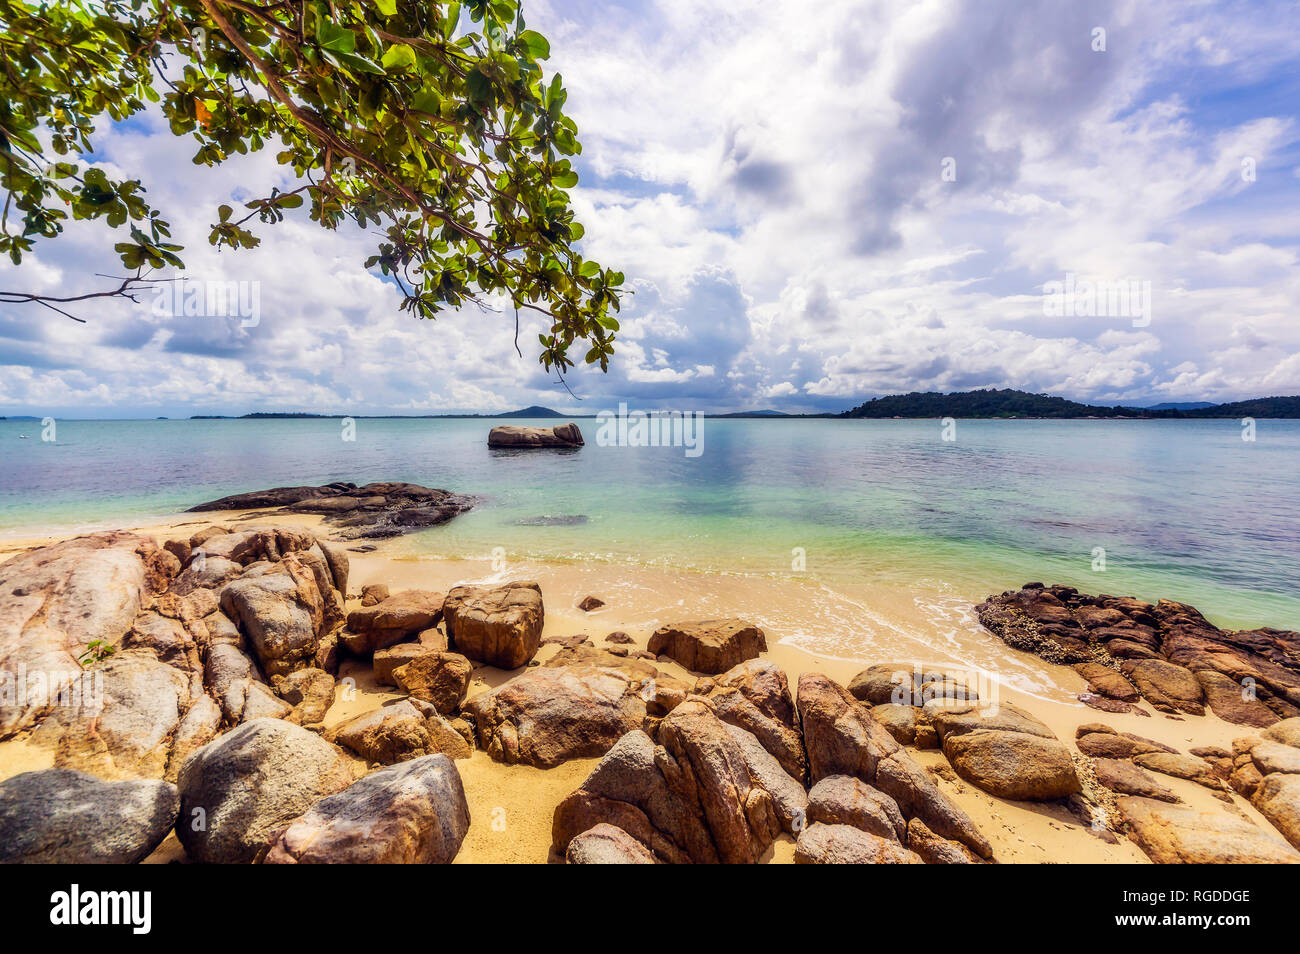 Indonesia, Riau Islands, Bintan, beach Stock Photo